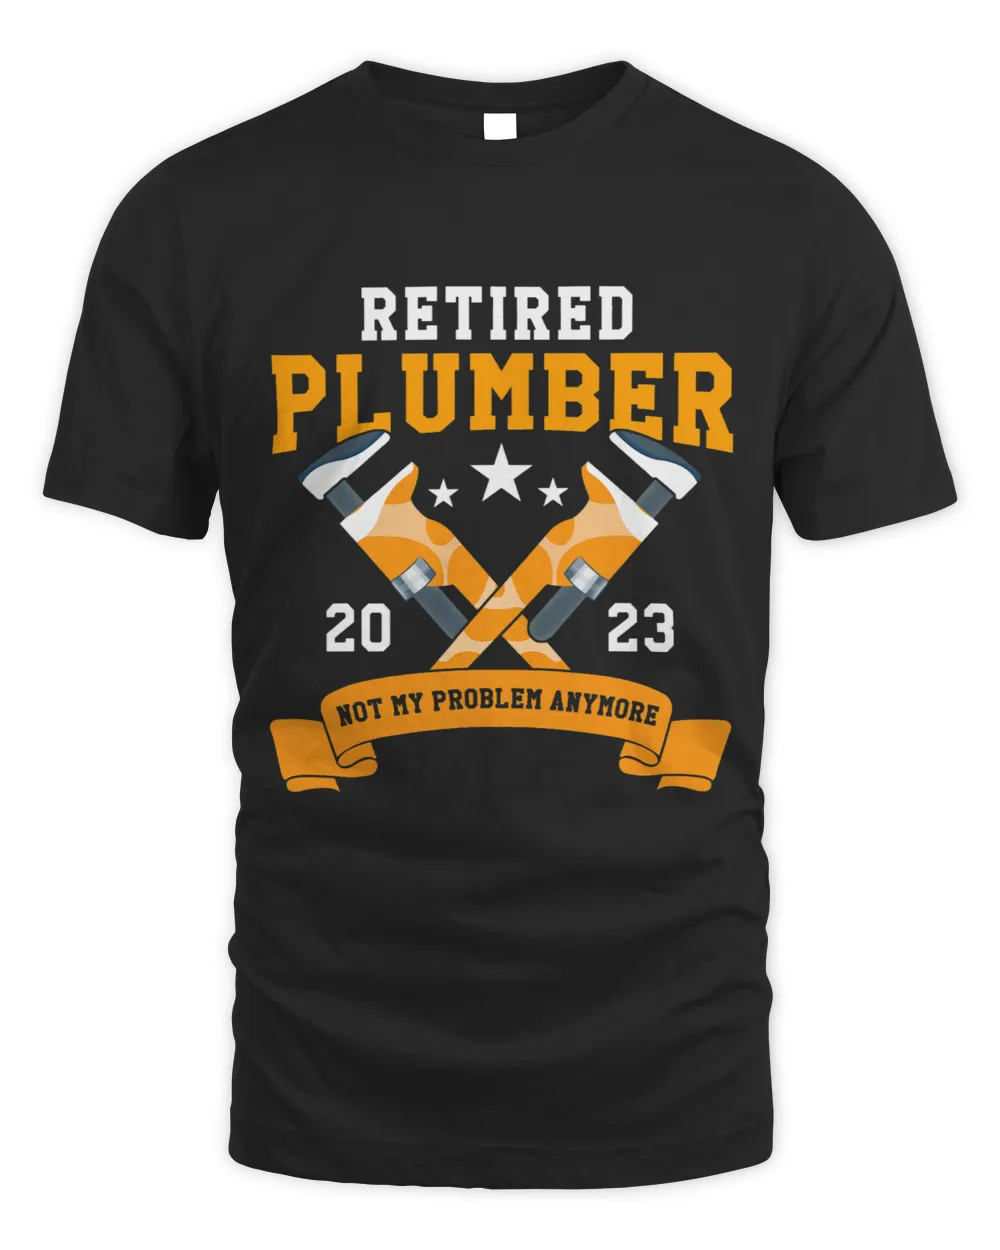 Mens Retired Plumber Not My Problem Anymore Retirement